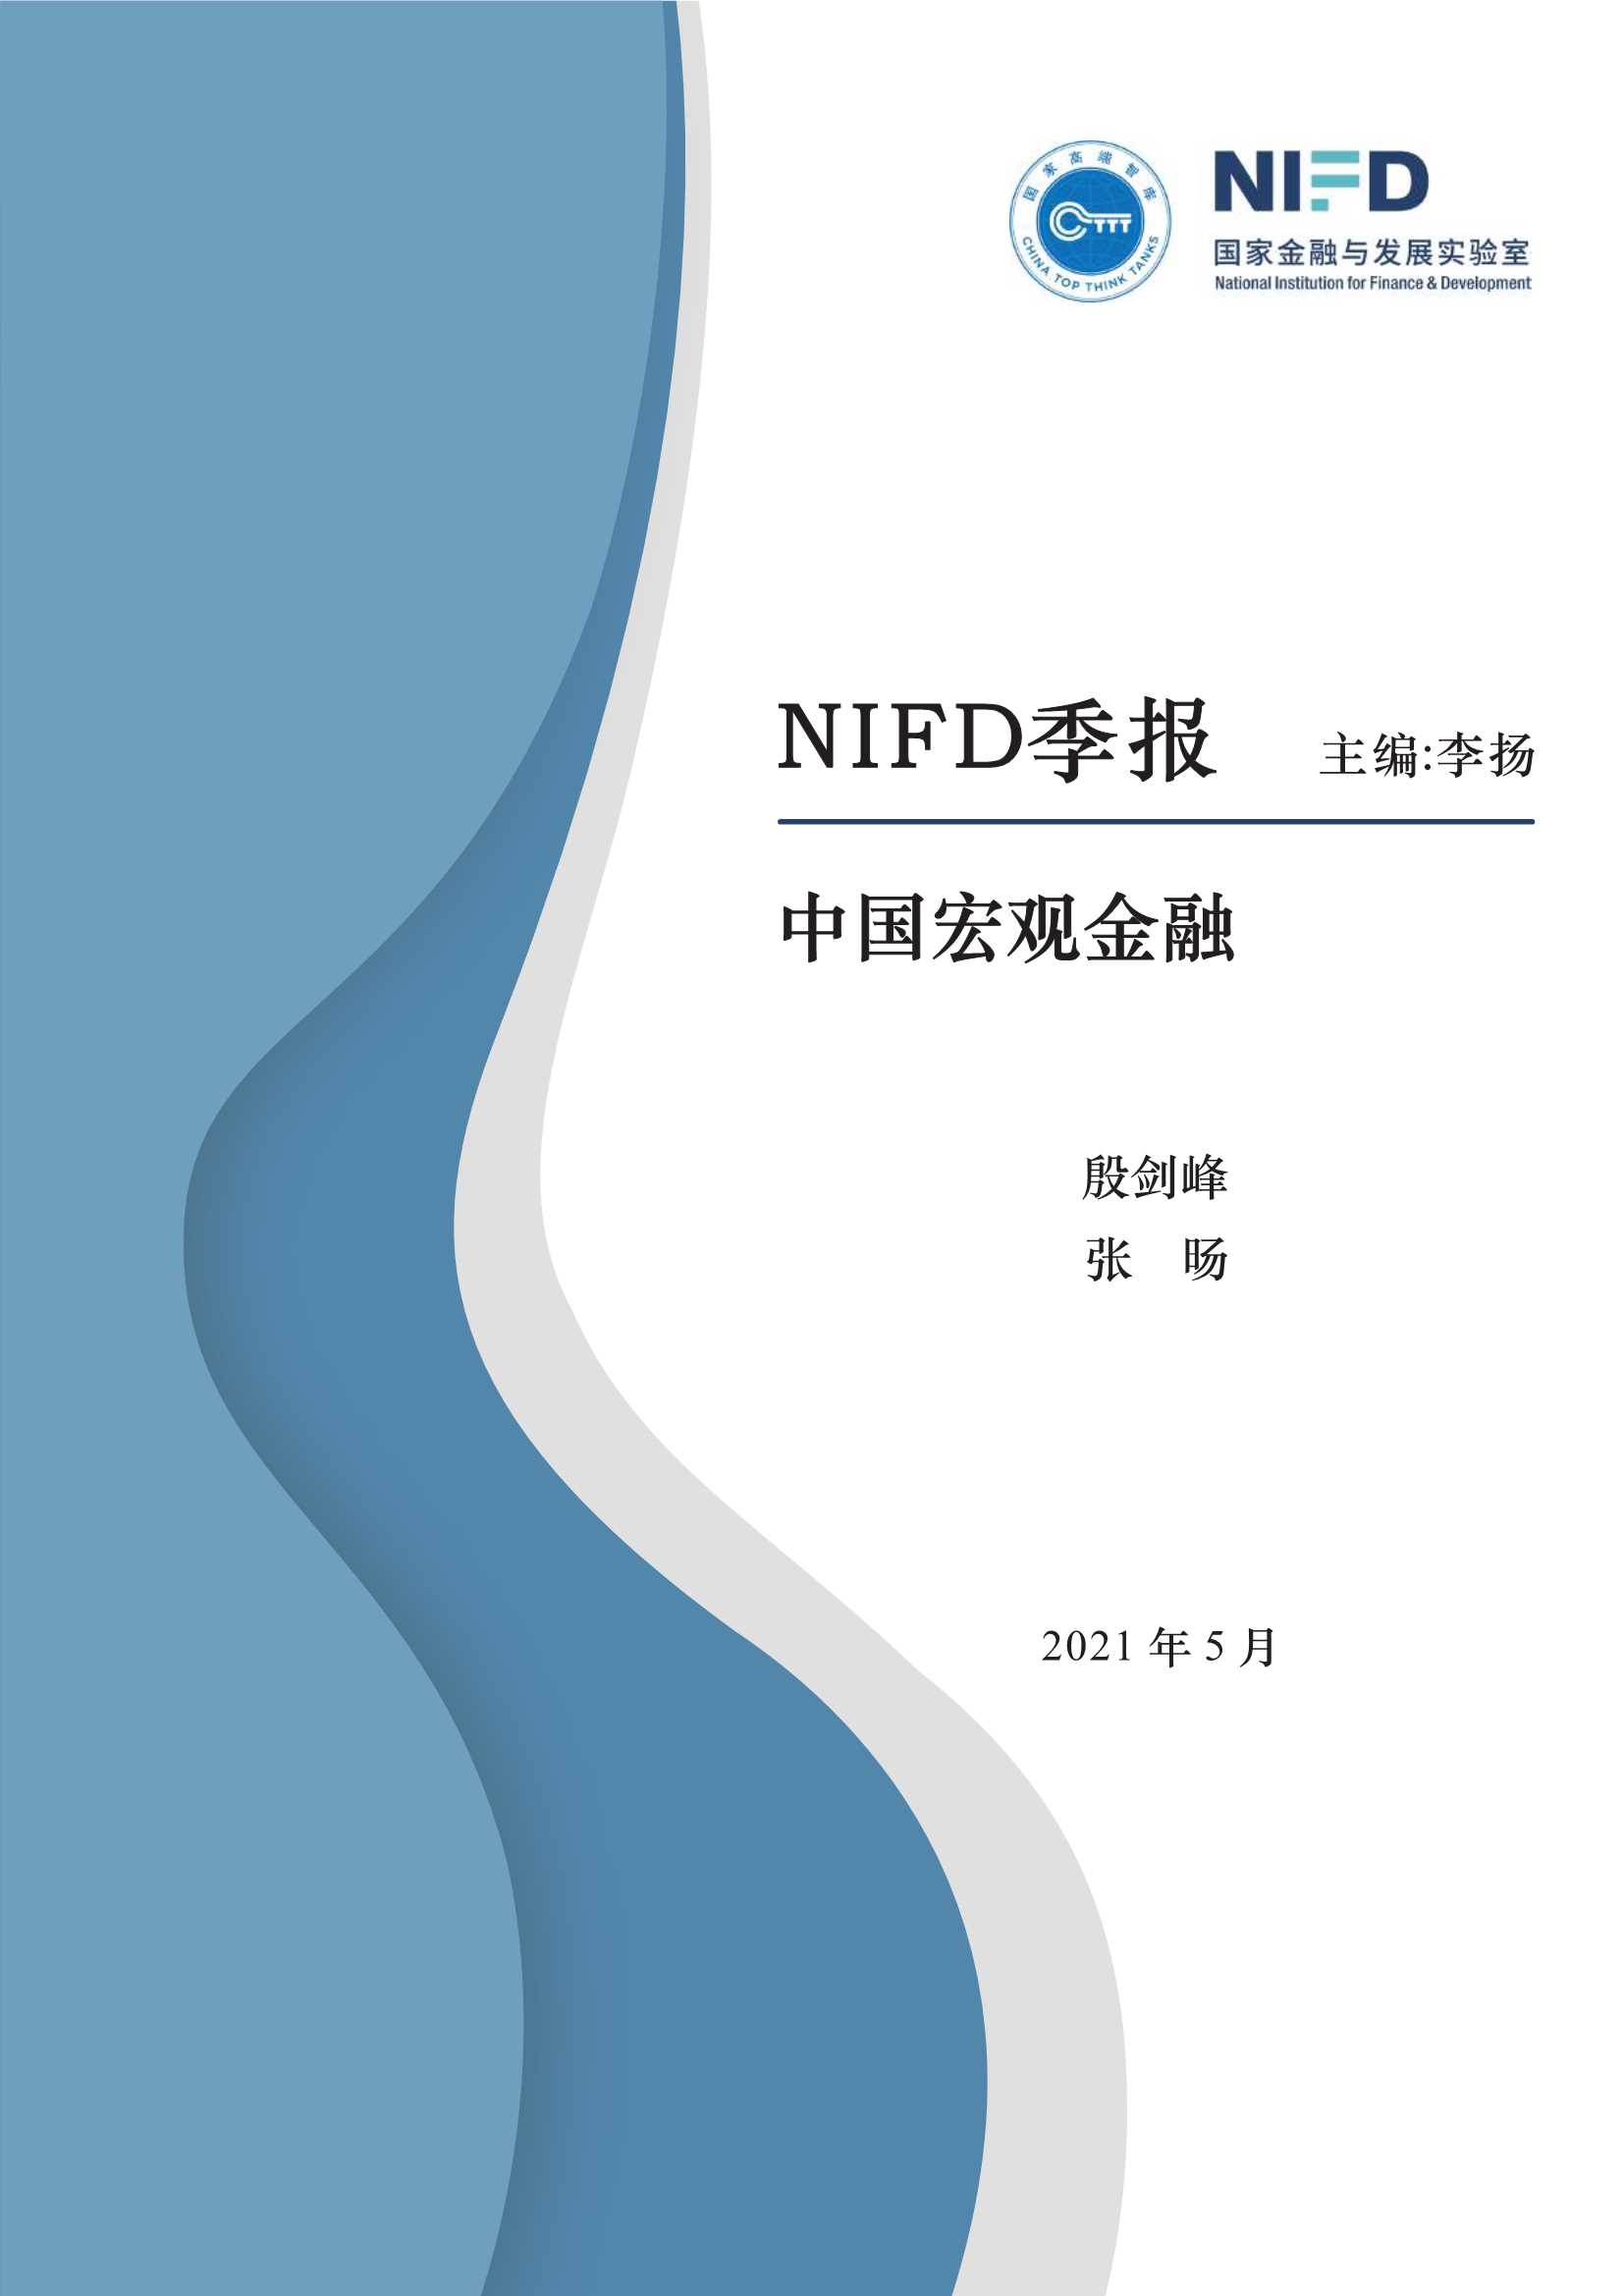 NIFD-2021Q1中国宏观金融-2021.05-15页